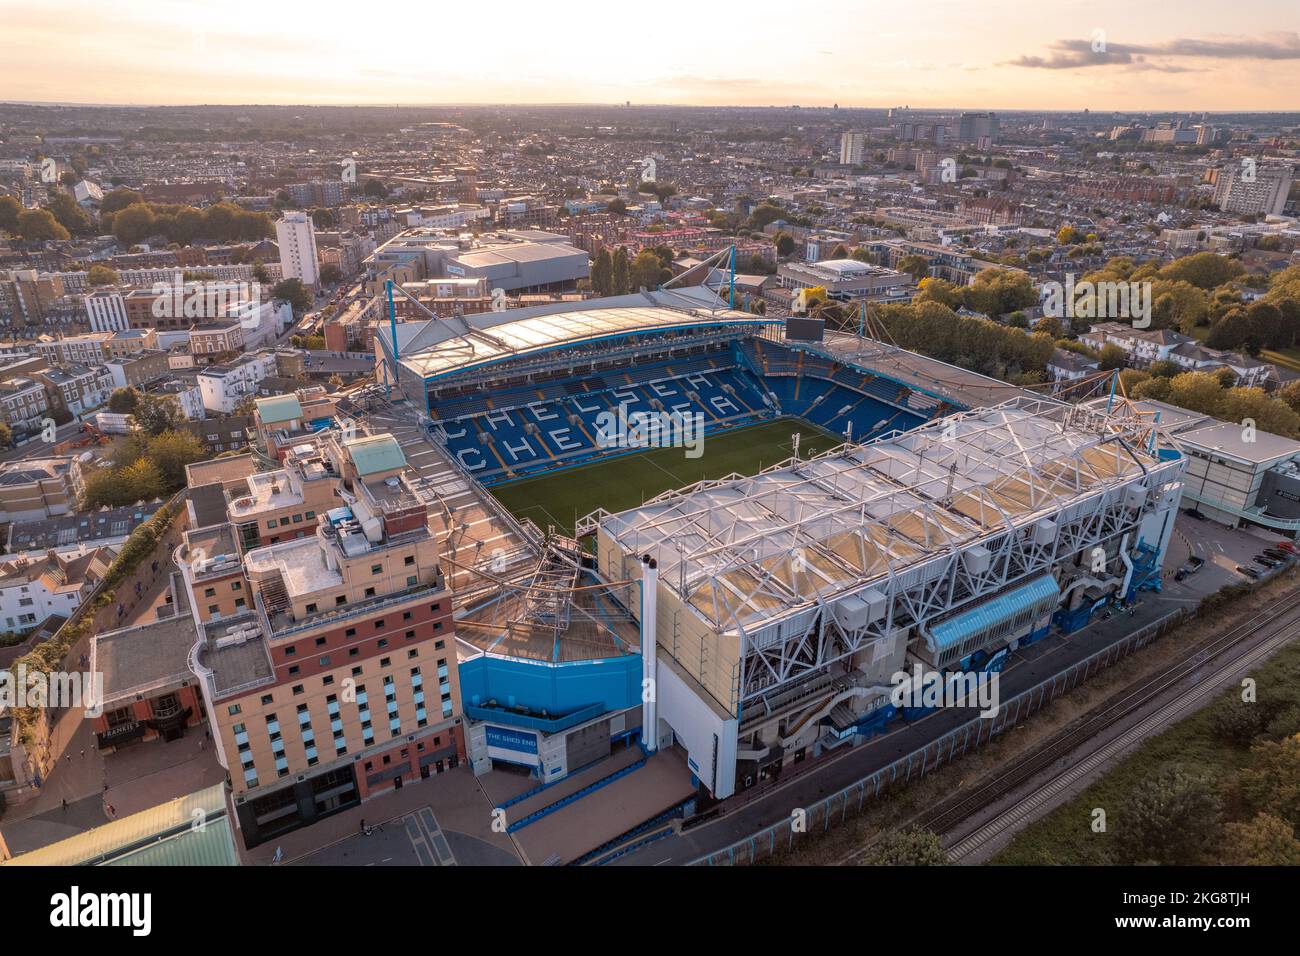 Stamford Bridge View 🏟️😍 #stadium #stamfordbridge @chelseafc